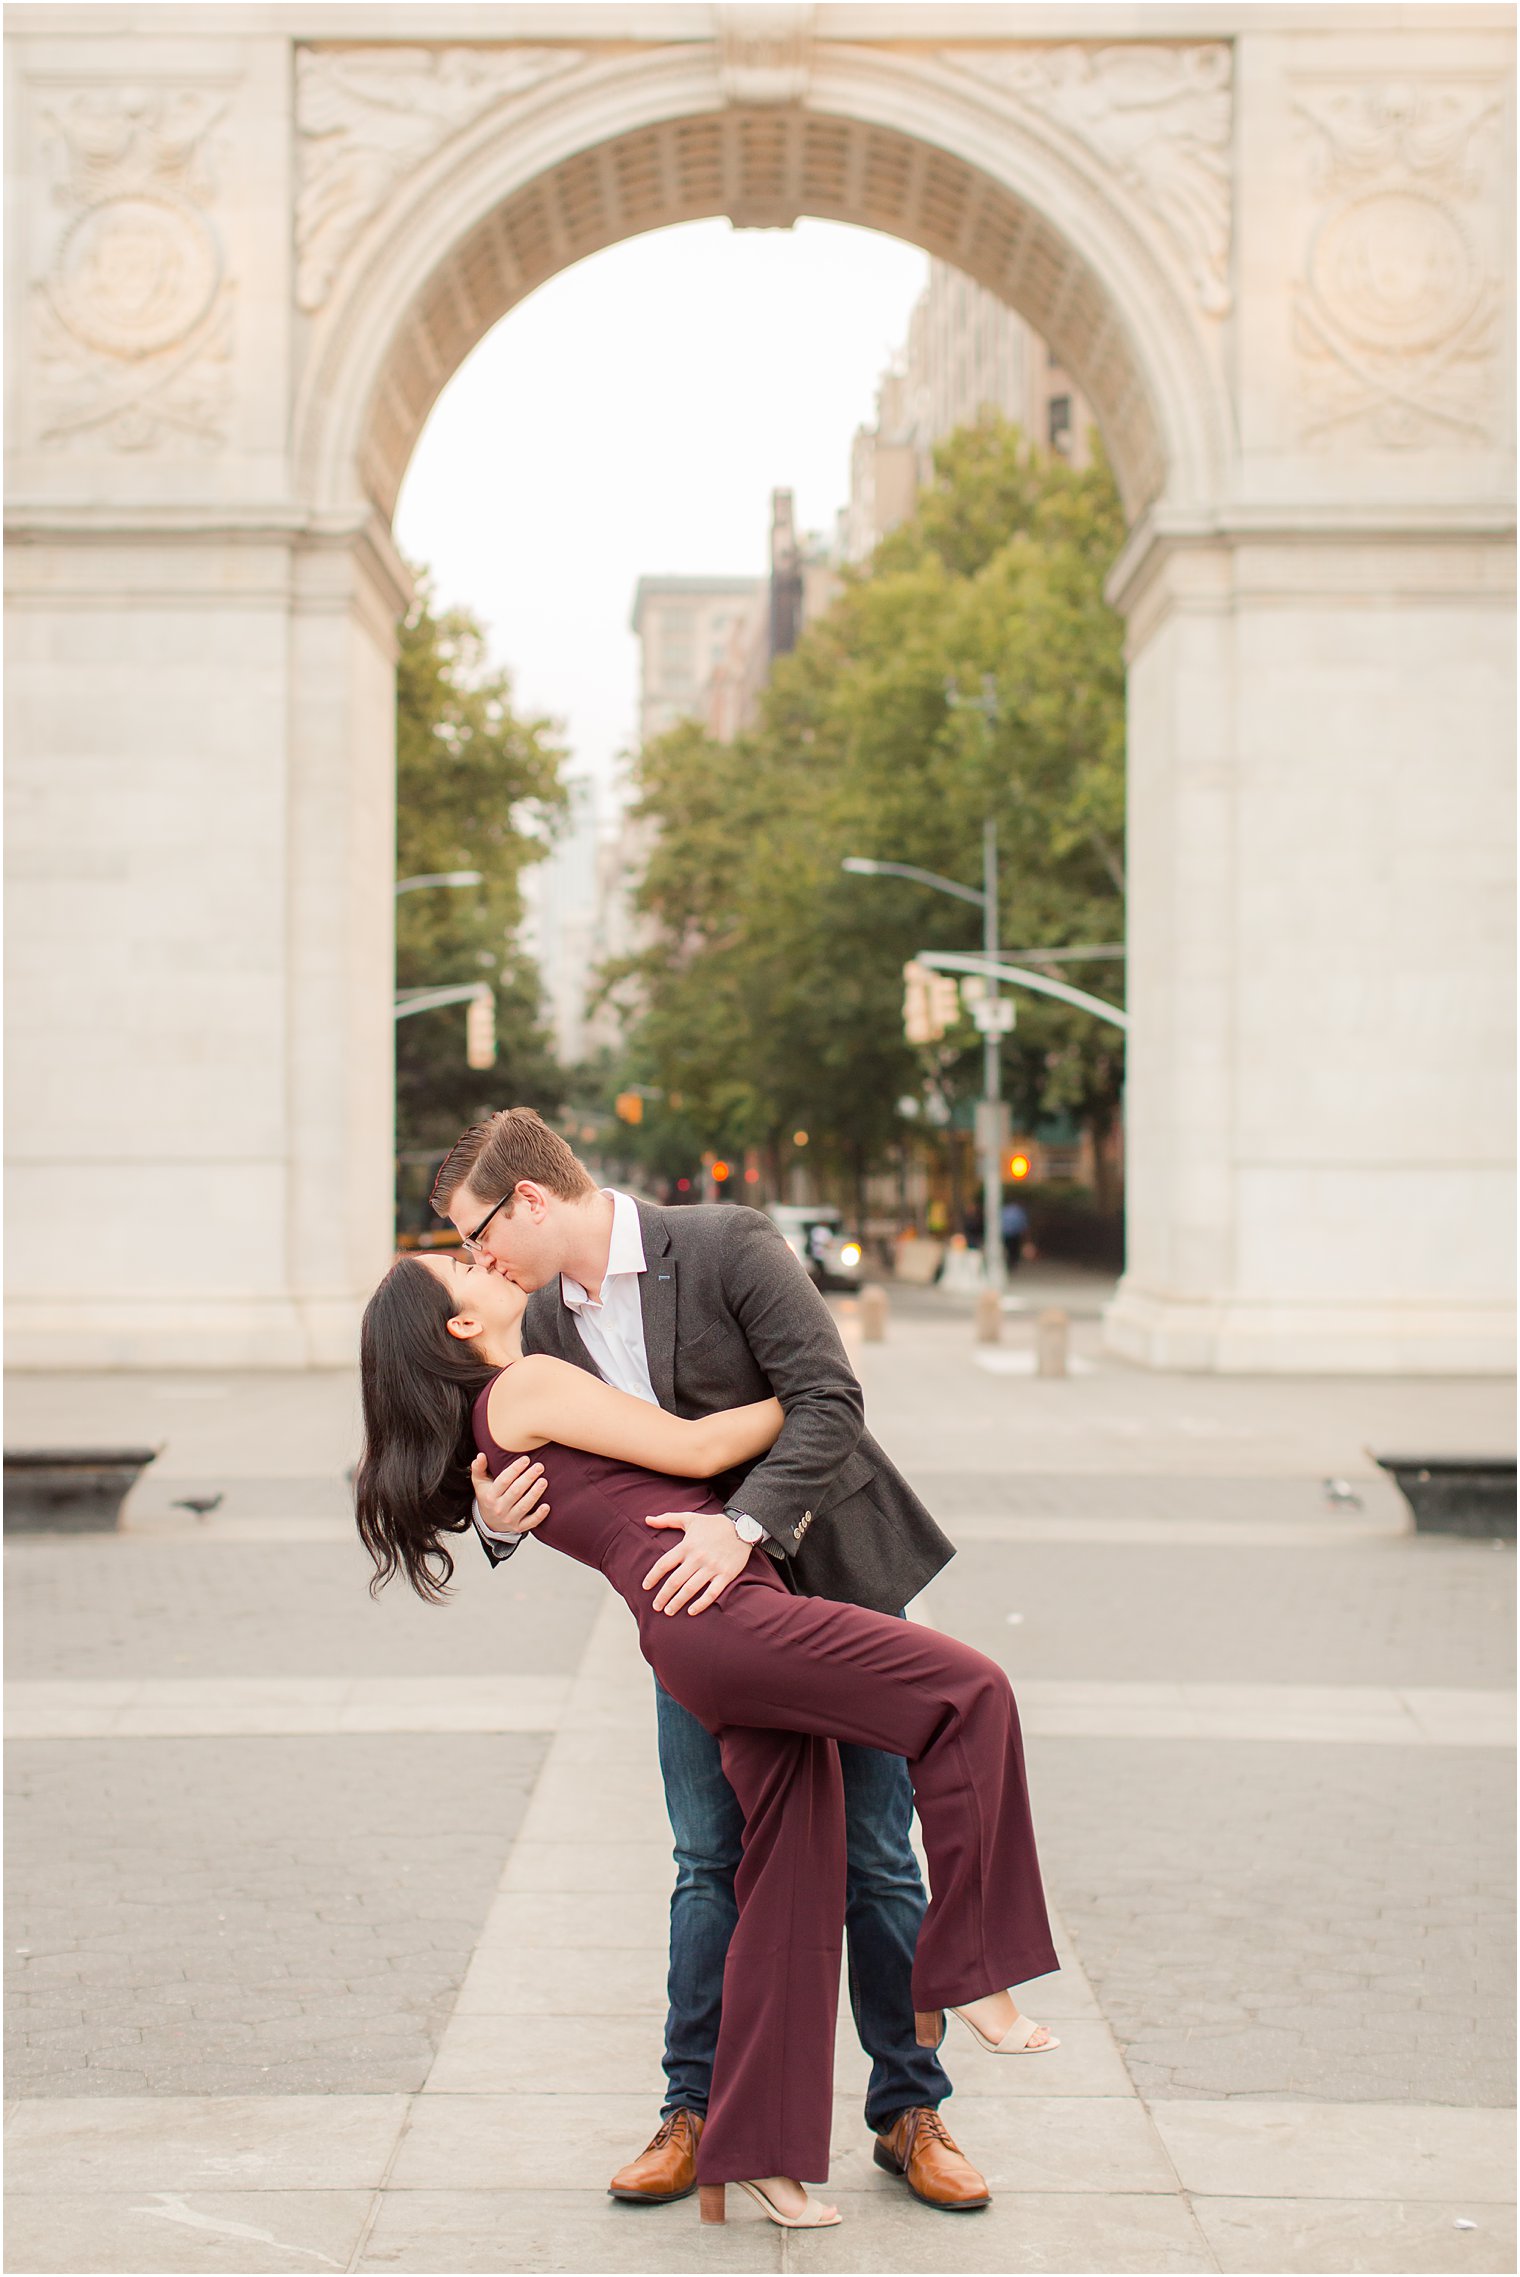 Washington Square Park engagement photos in NYC